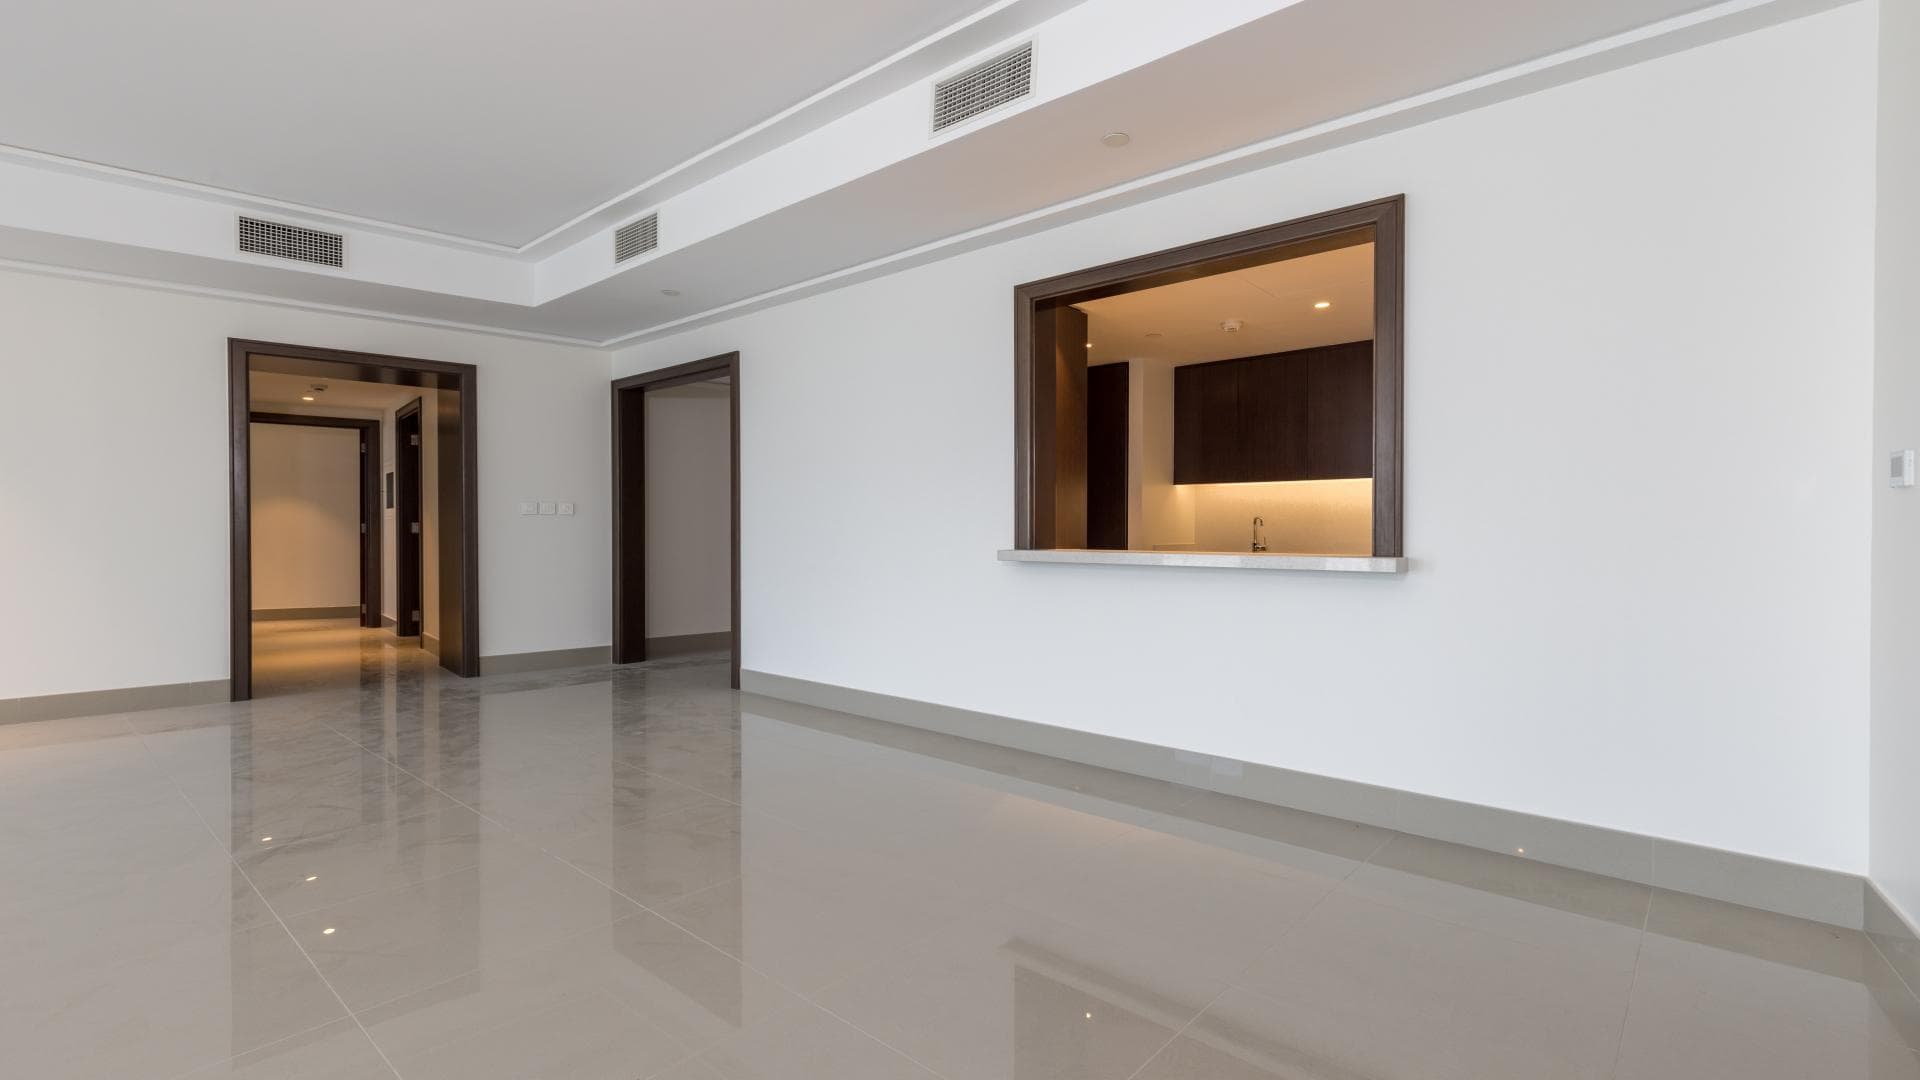 3 Bedroom Apartment For Sale Al Ramth 21 Lp37924 173eac90e7e19600.jpg